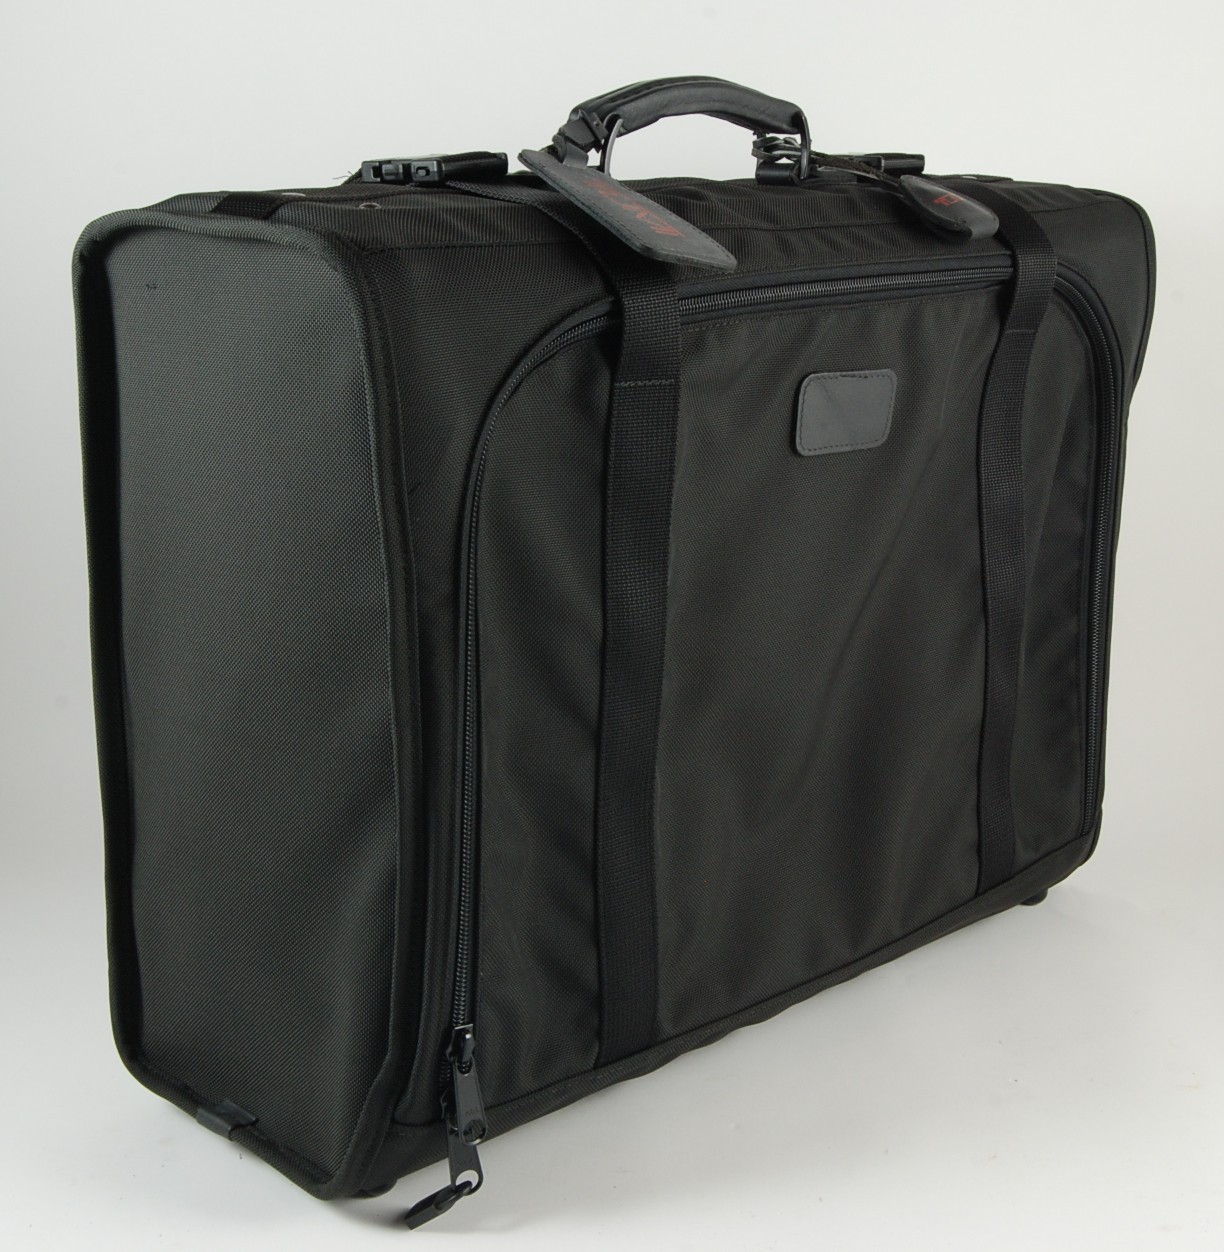 Tumi Black Canvas Suitcase Luggage Classic Style 23.5 x 17 x 9 New - $65.00